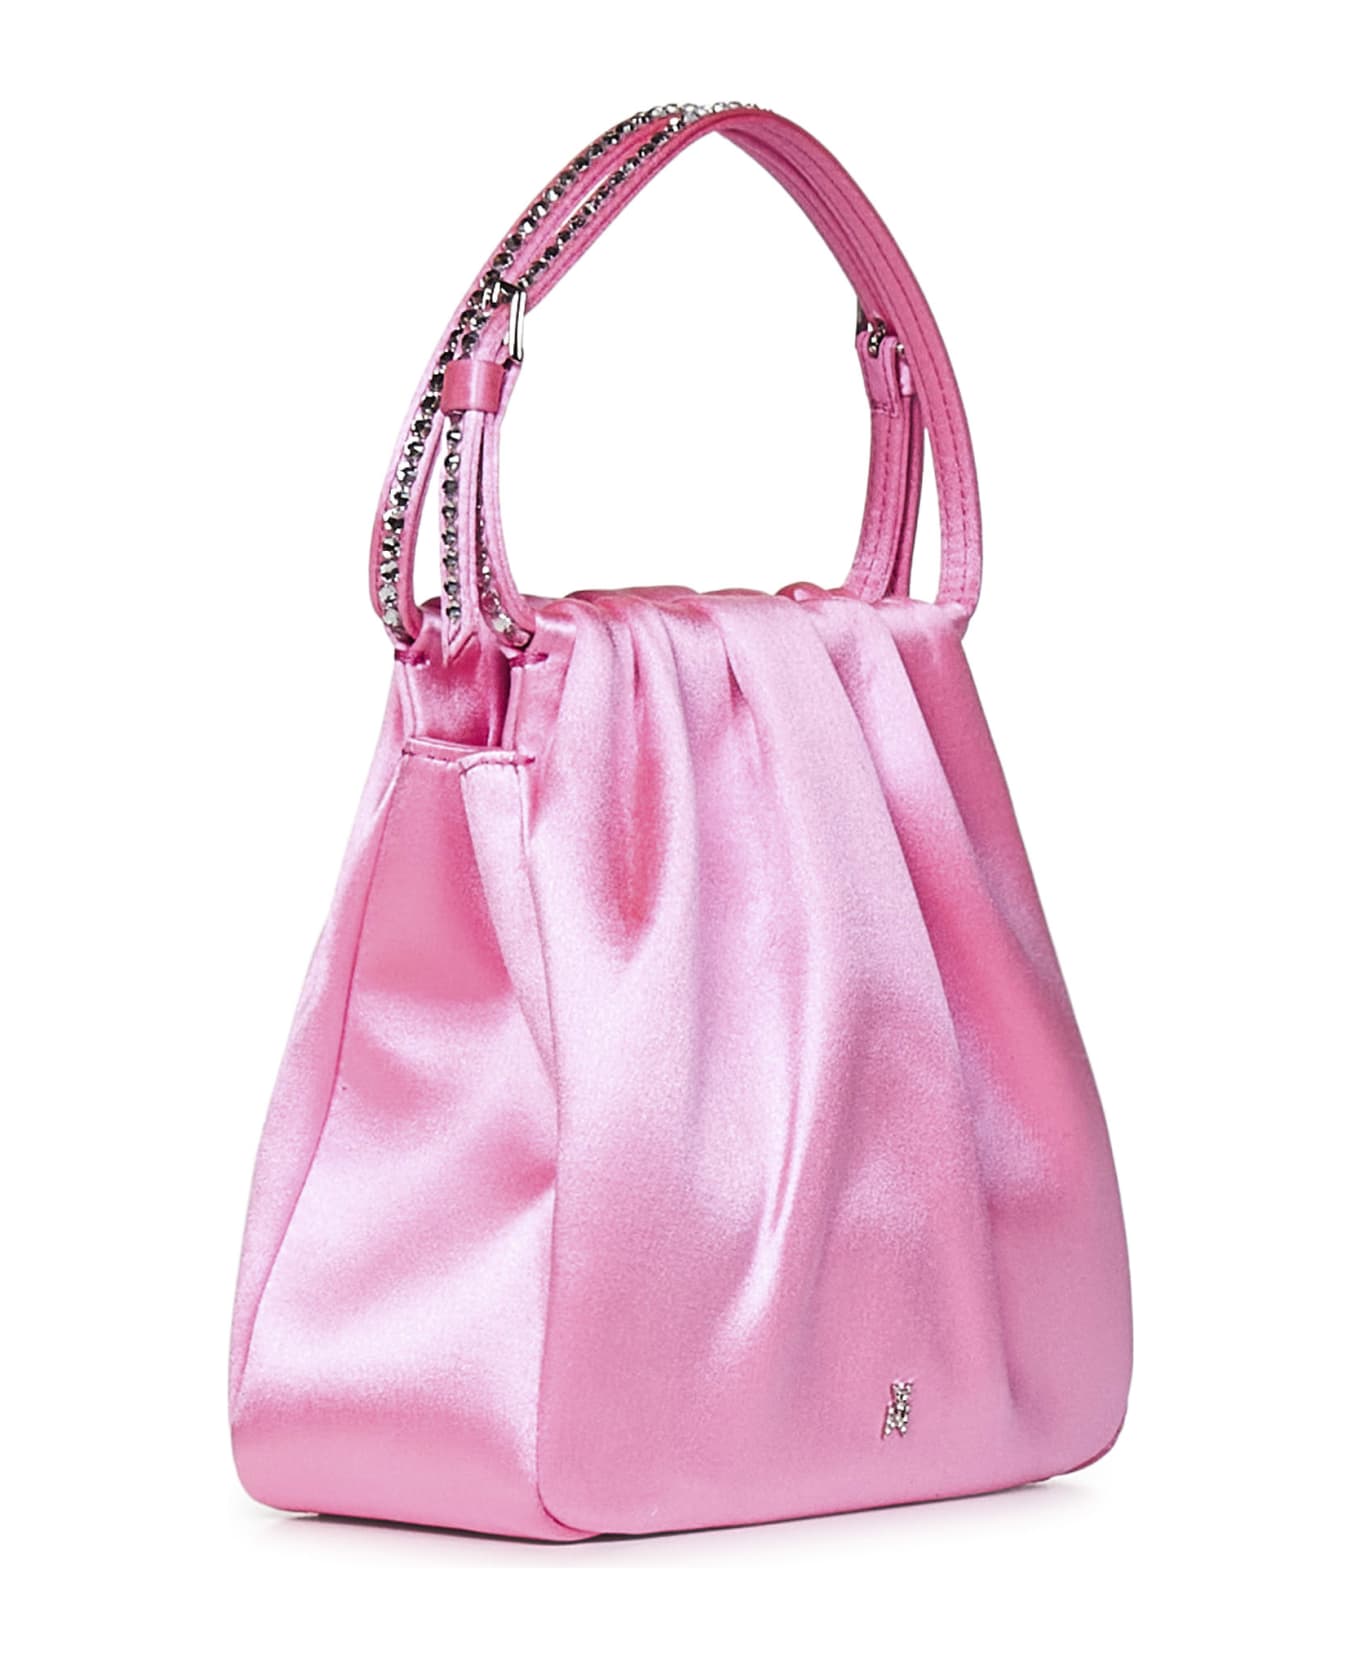 Amina Muaddi Vittoria Crystal Handbag - Pink